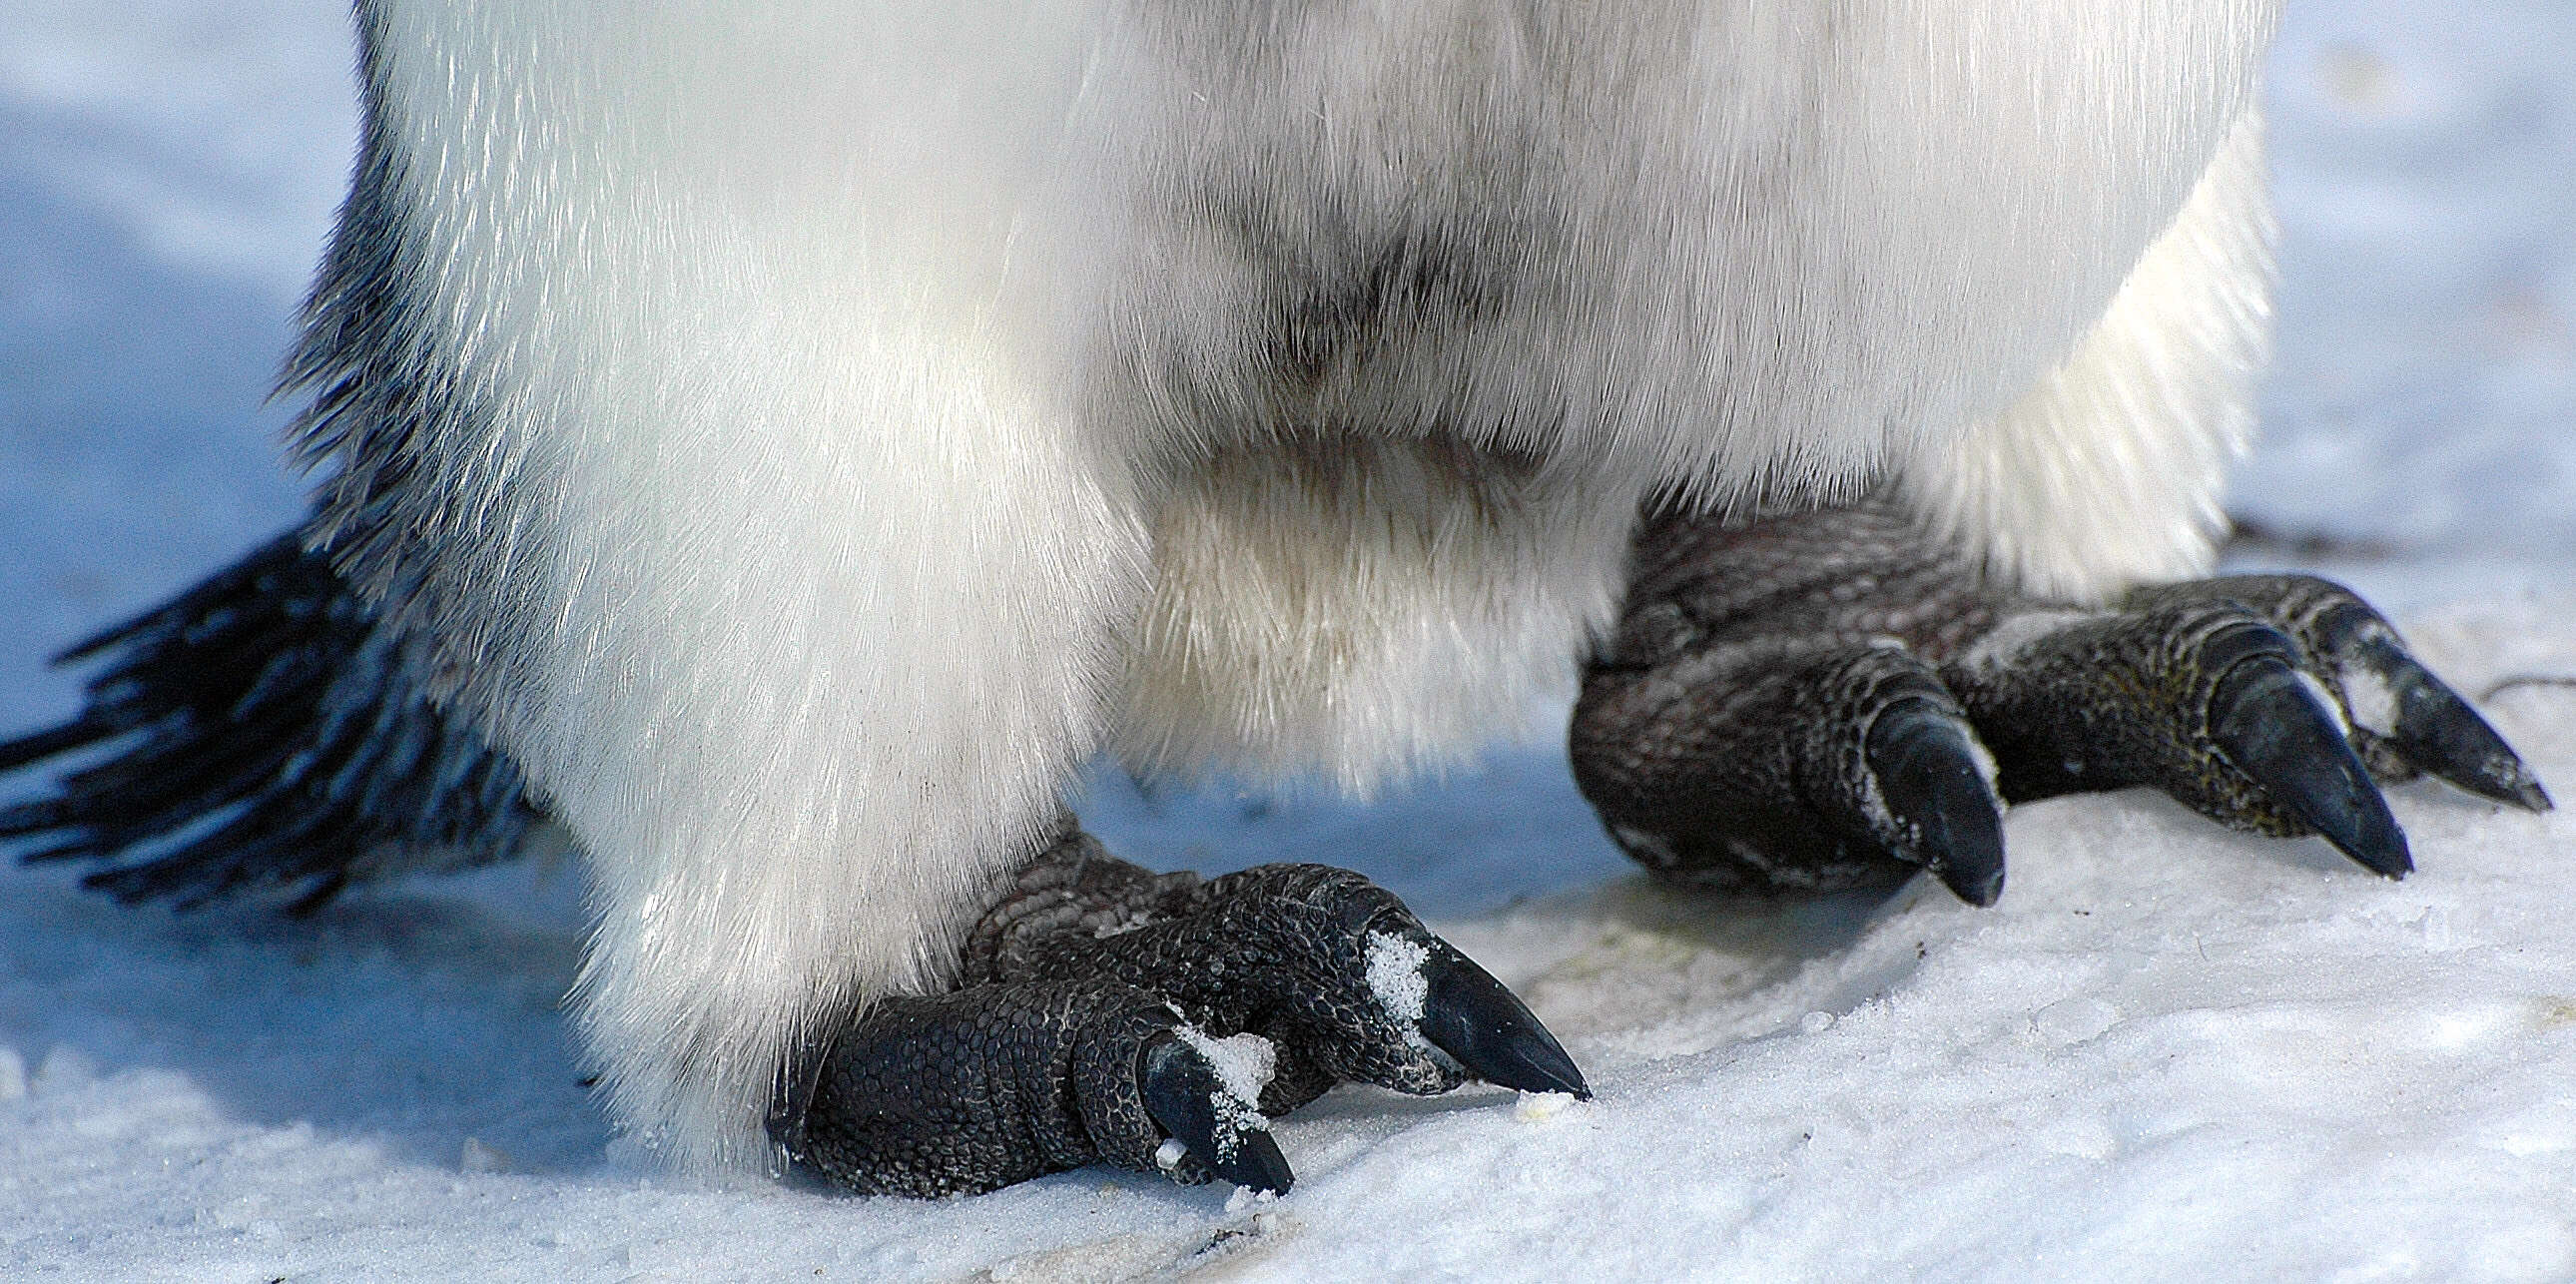 Image of Emperor Penguin